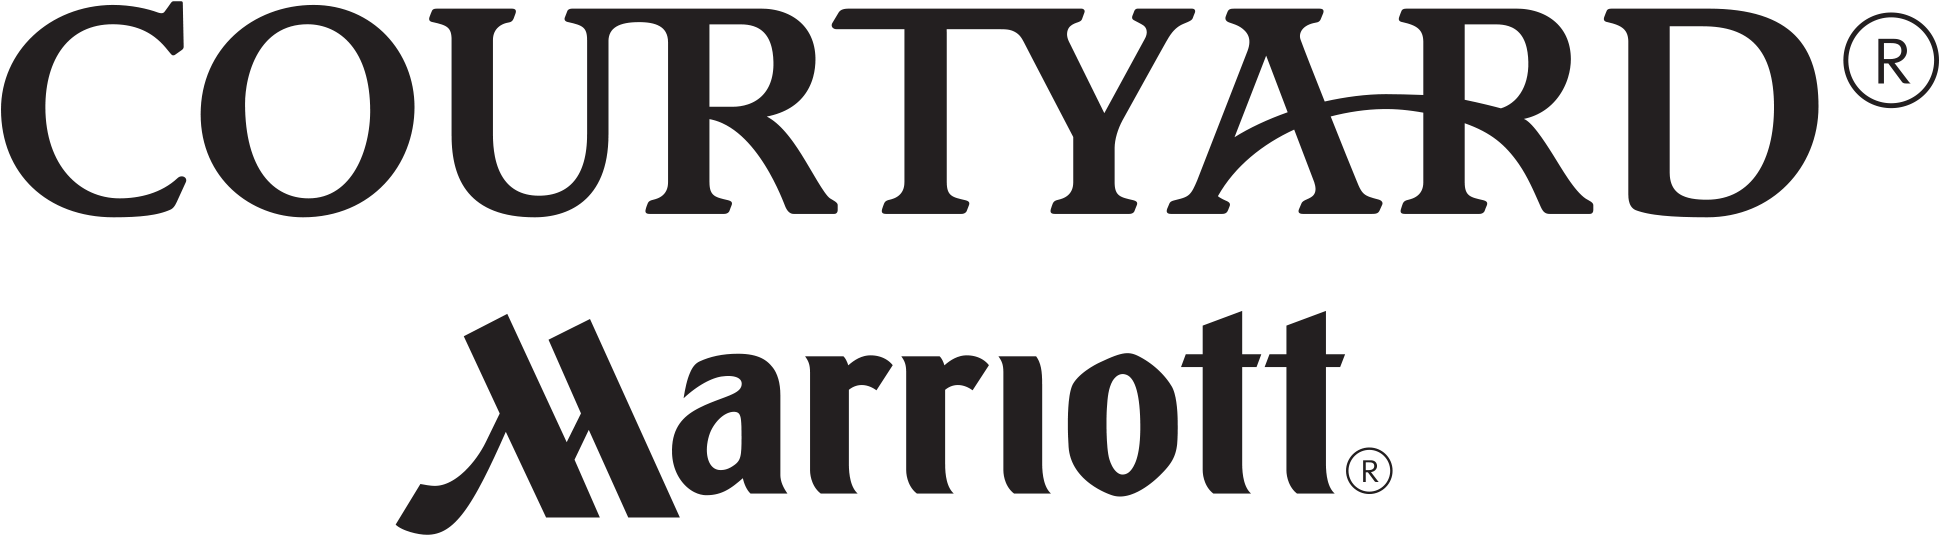 Courtyard Marriott Logo Clipart (2031x700), Png Download